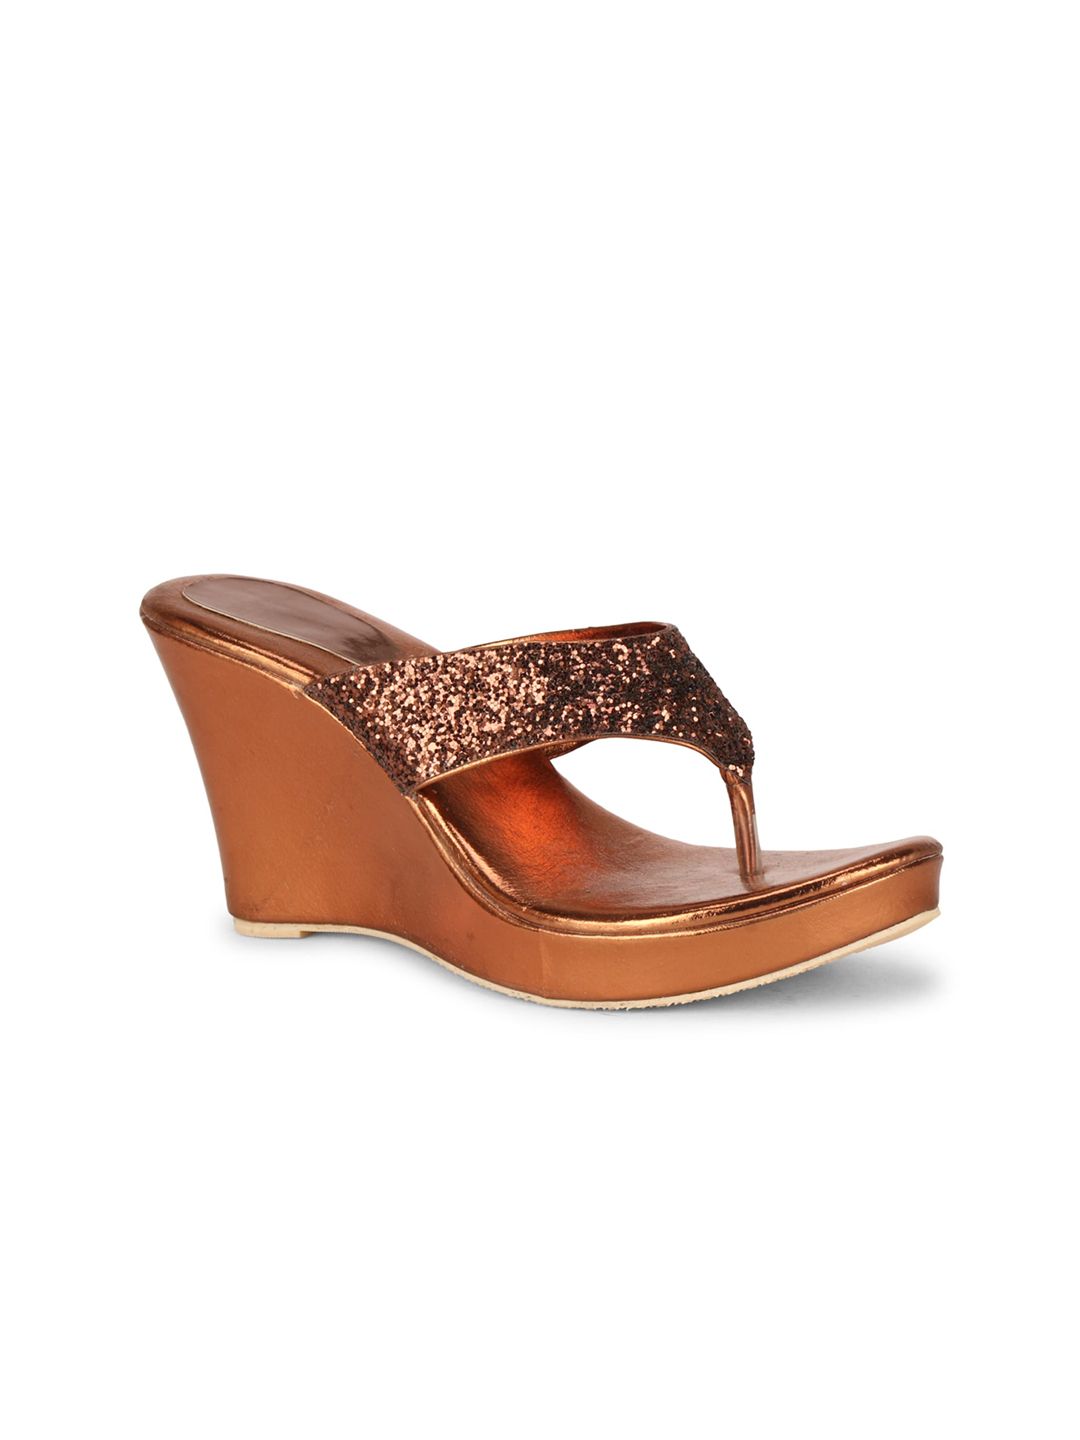 Misto Women Copper-Toned Wedge Heels Price in India